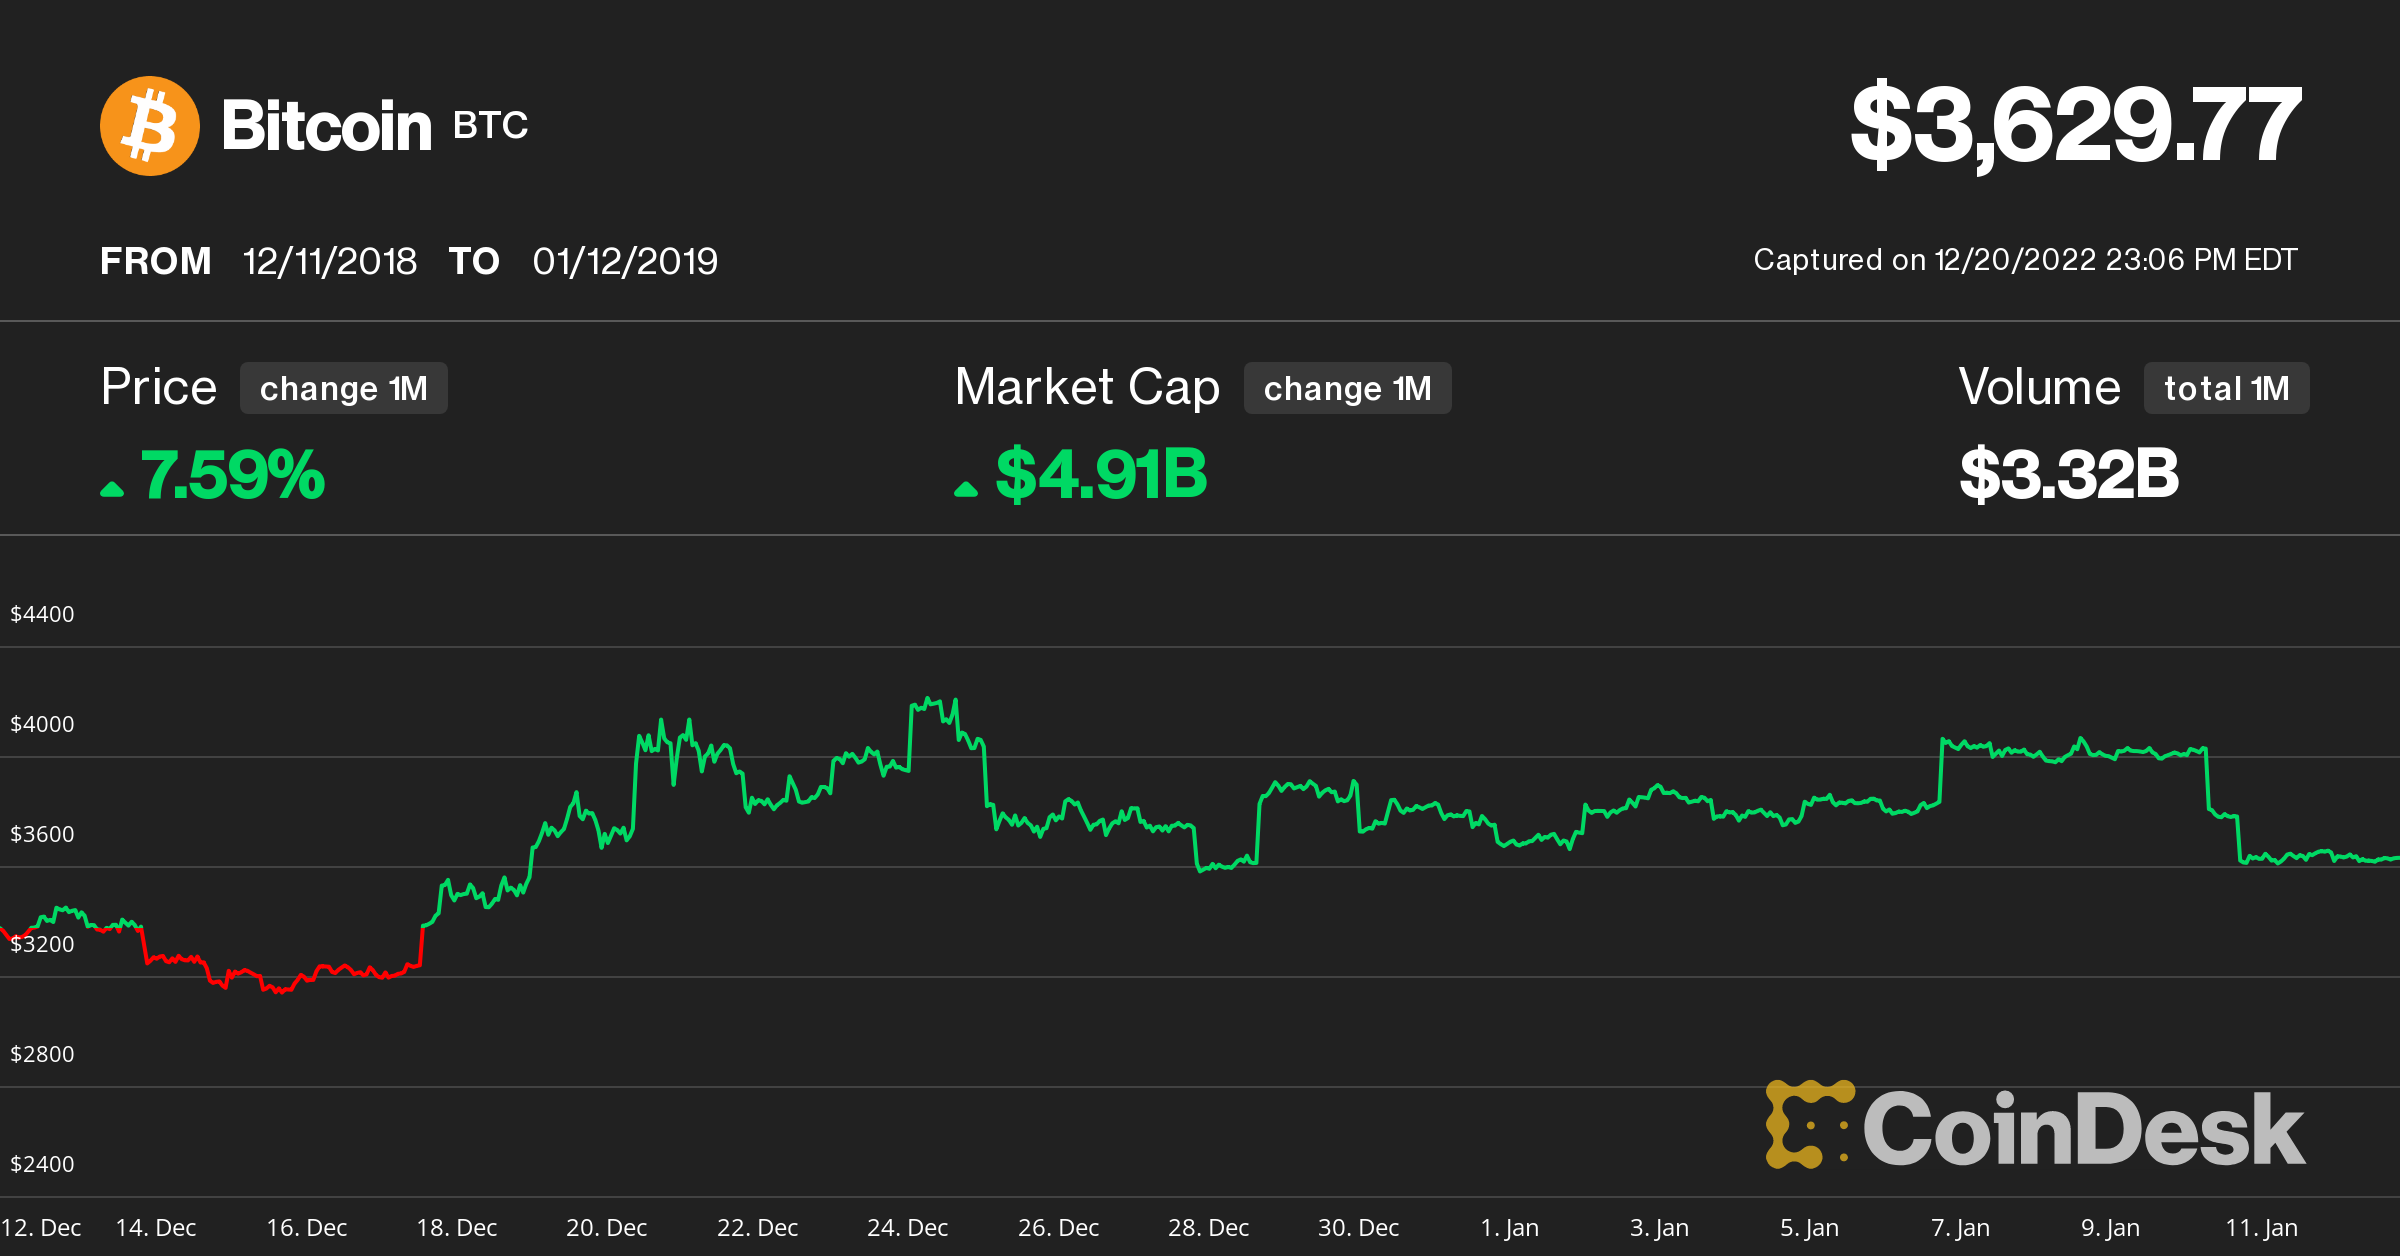 Bitcoin Price: BTC for UTC period [12/11/2018 21:00 - 01/12/2019 20:59]